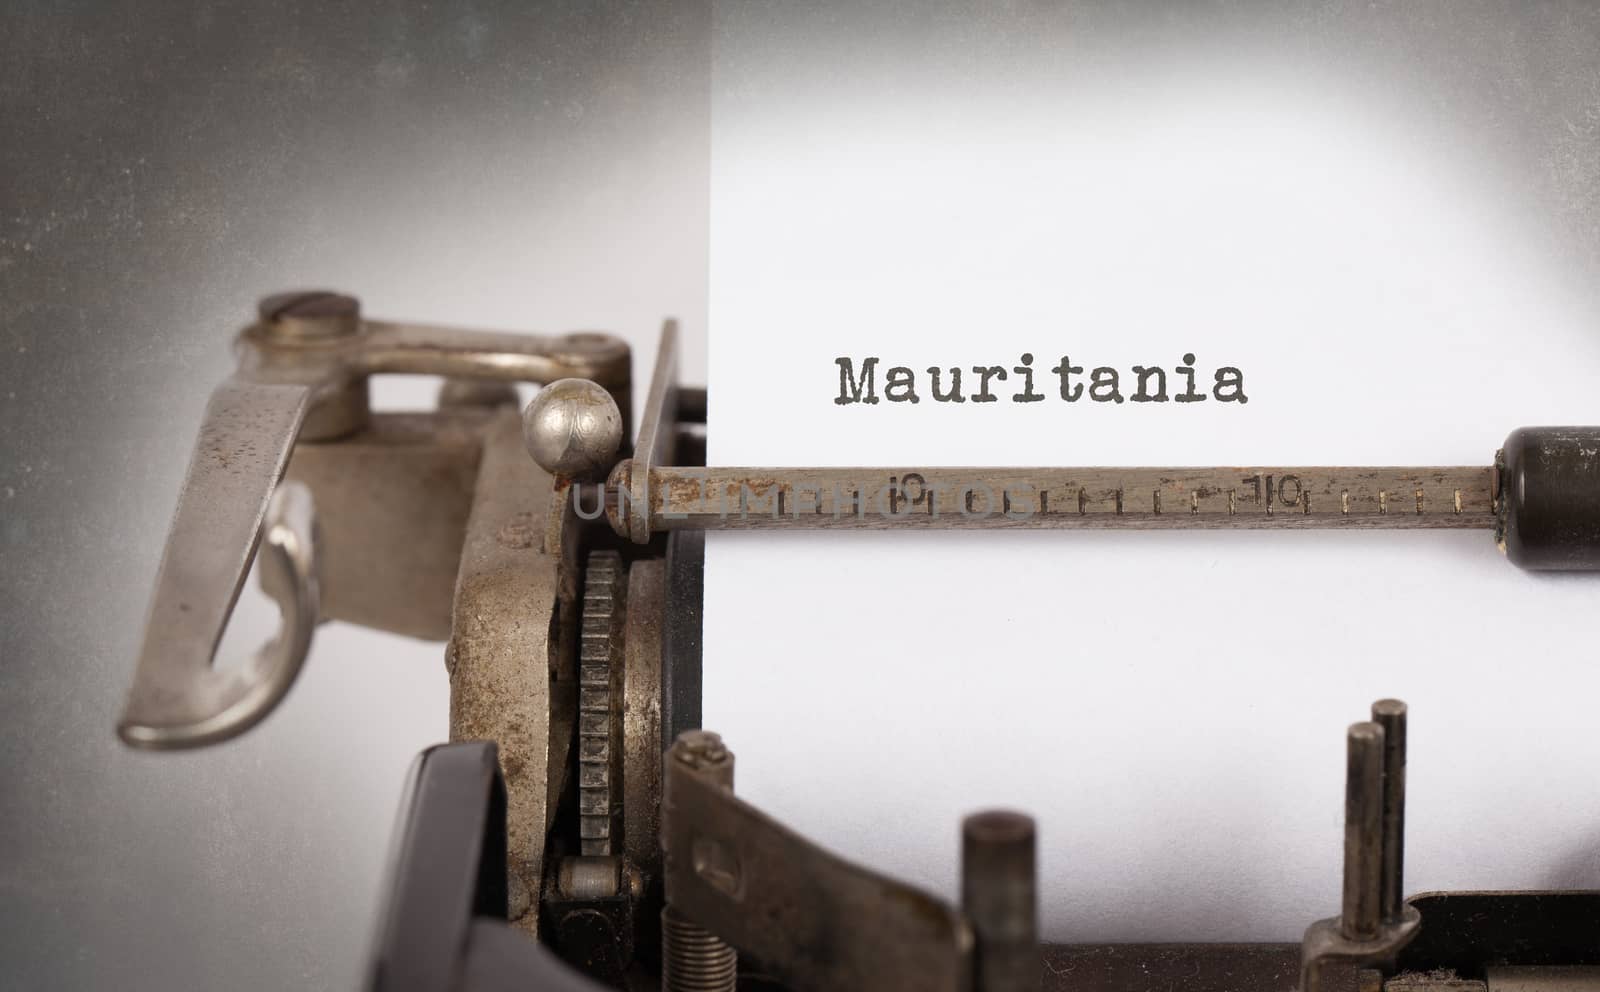 Old typewriter - Mauritania by michaklootwijk